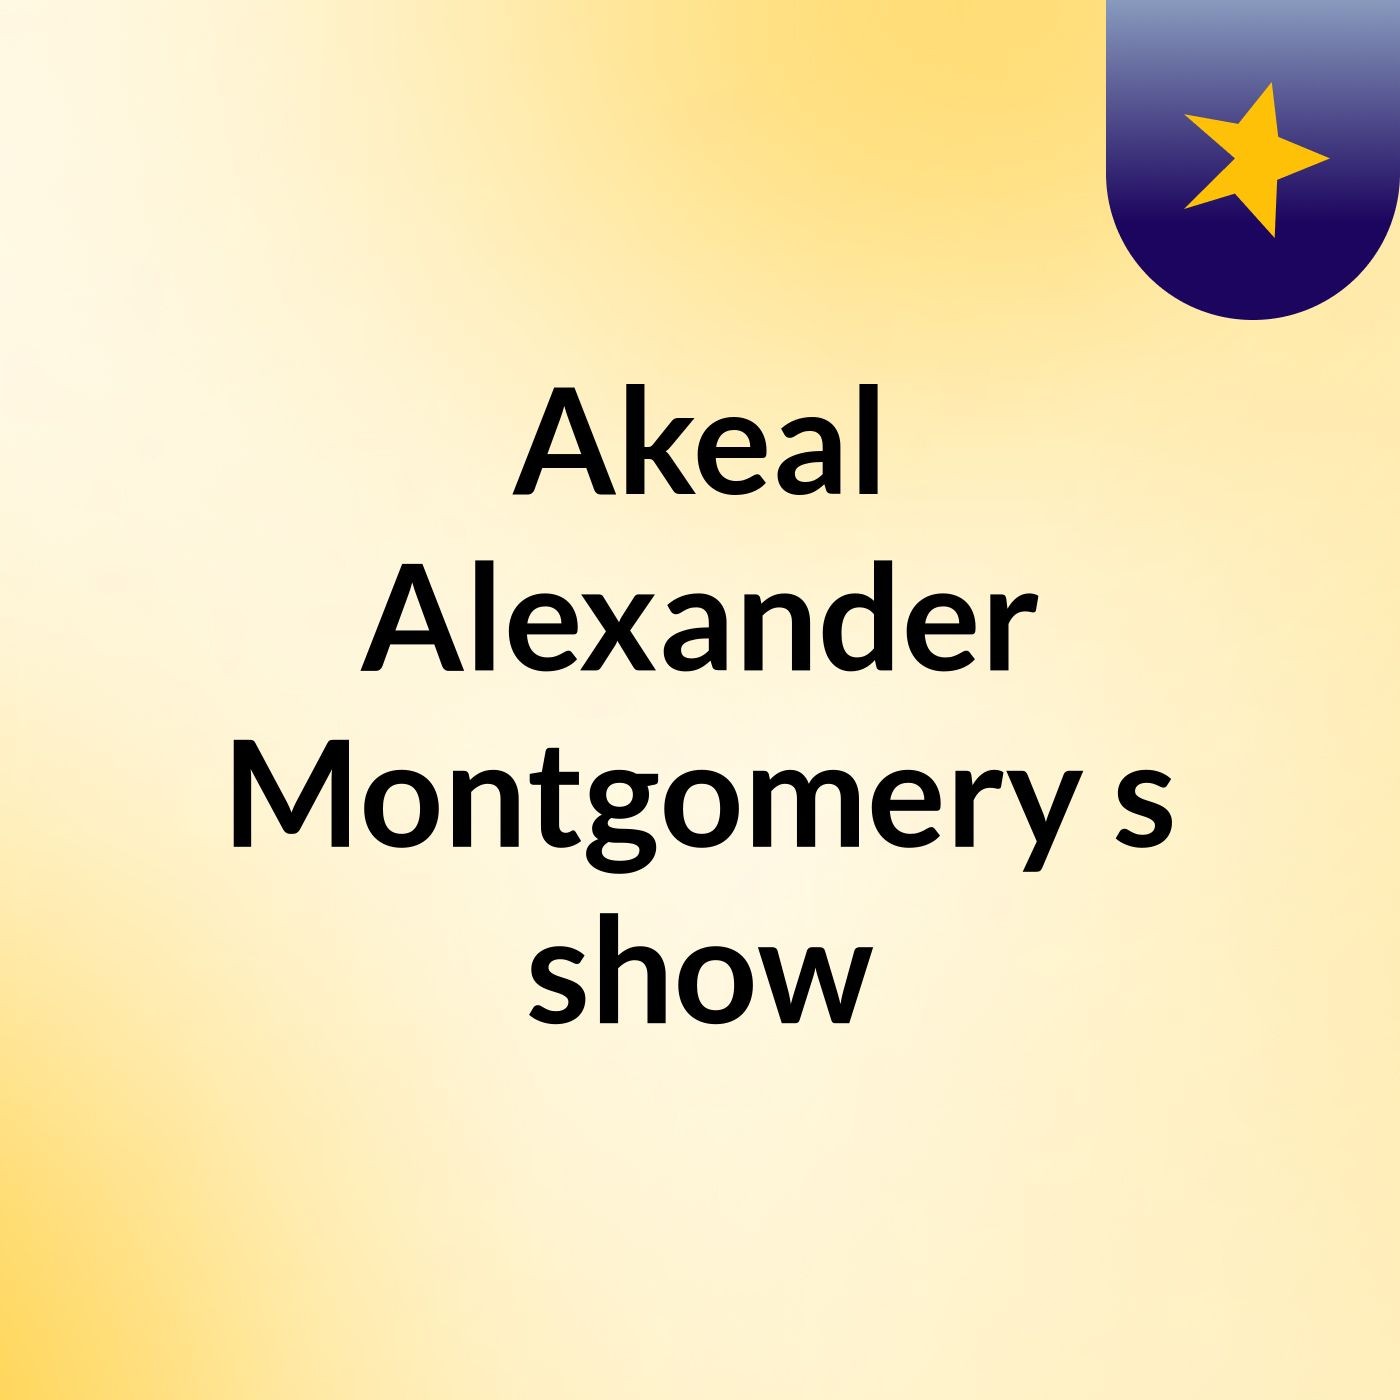 Akeal Alexander Montgomery's show